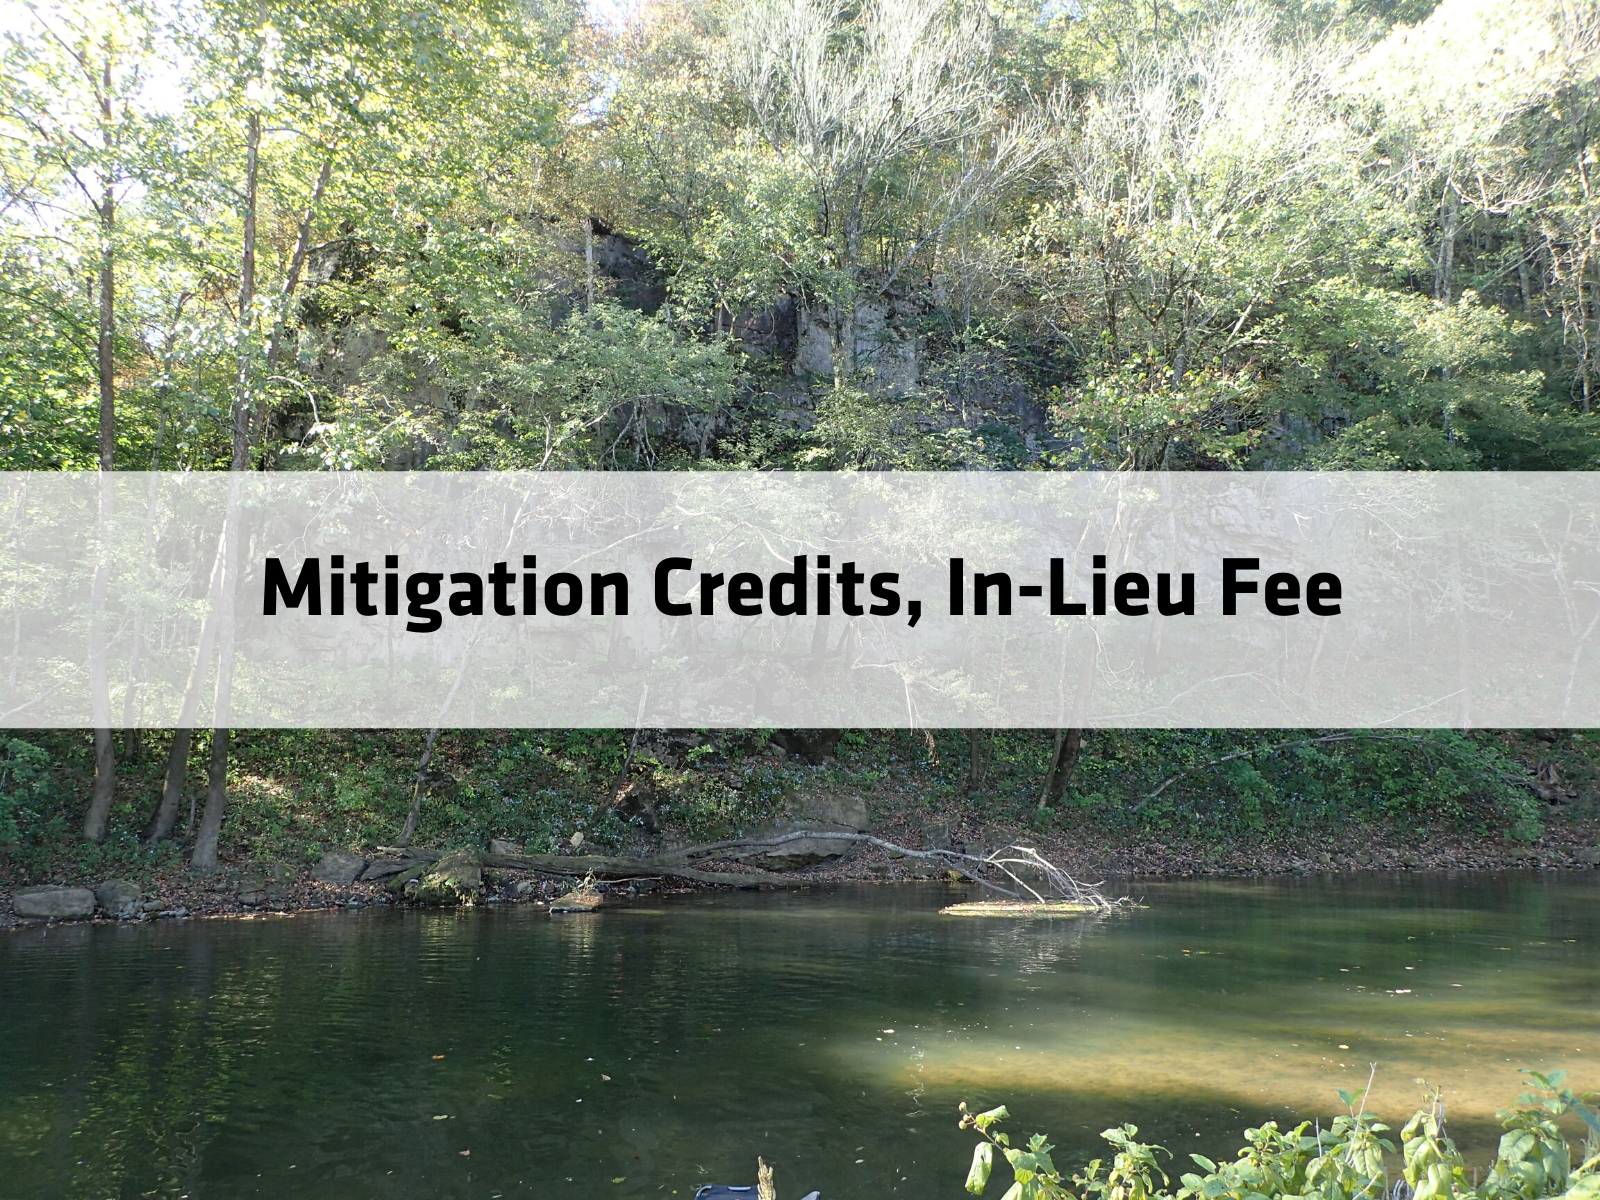 In-Lieu Fee (ILF) Compensatory Mitigation Programs